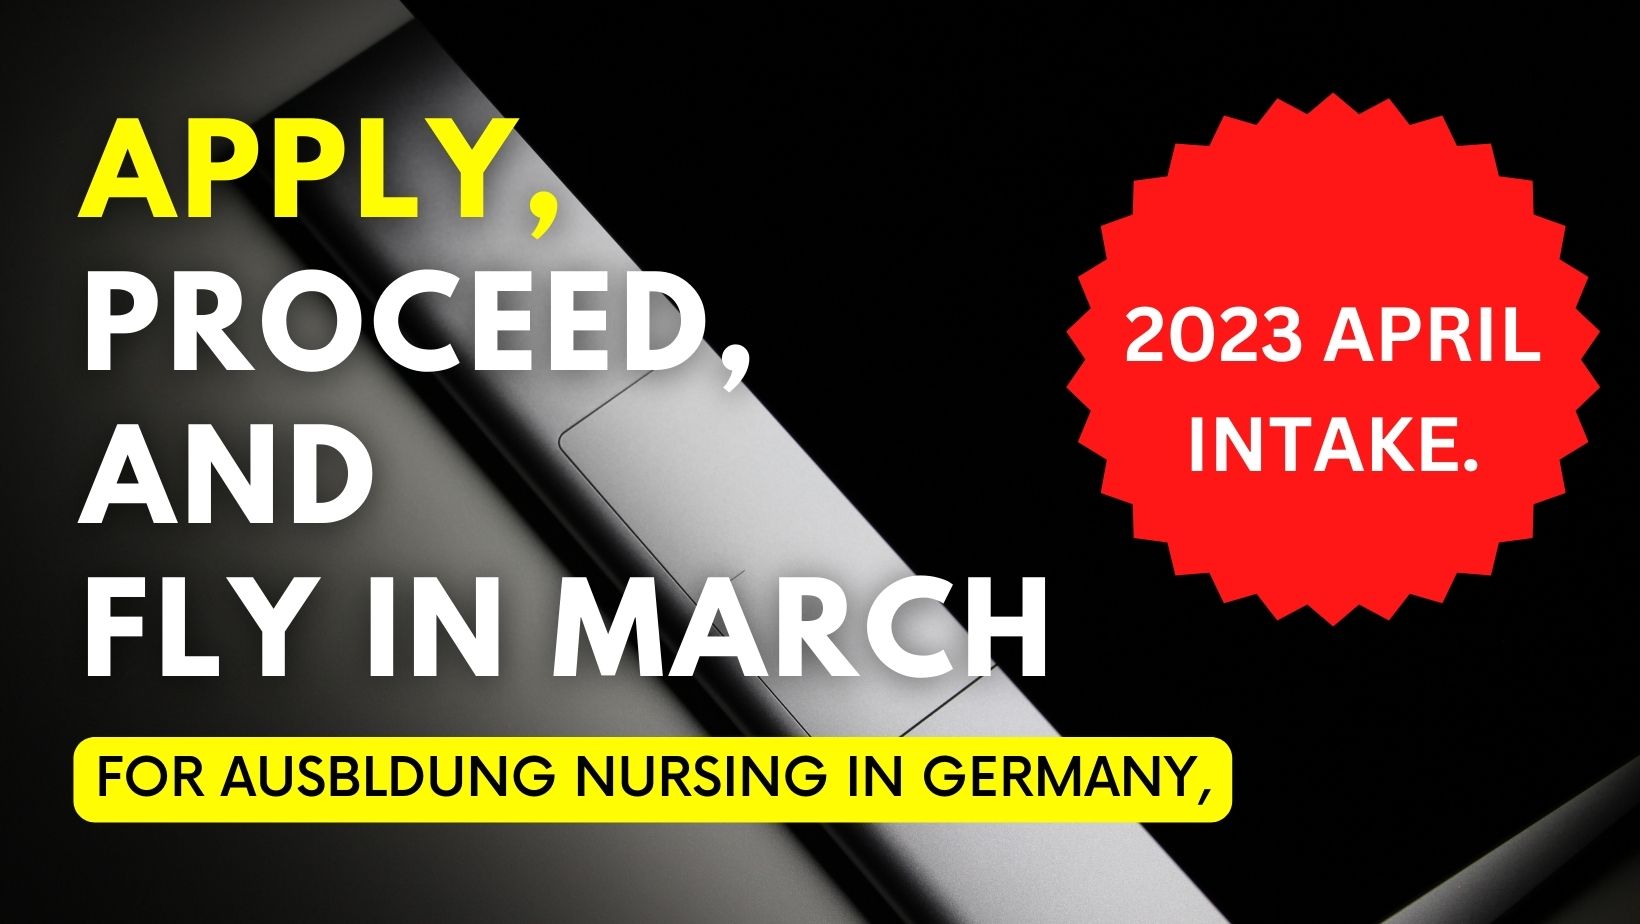 Ausbildung Nursing in Germany April 2023